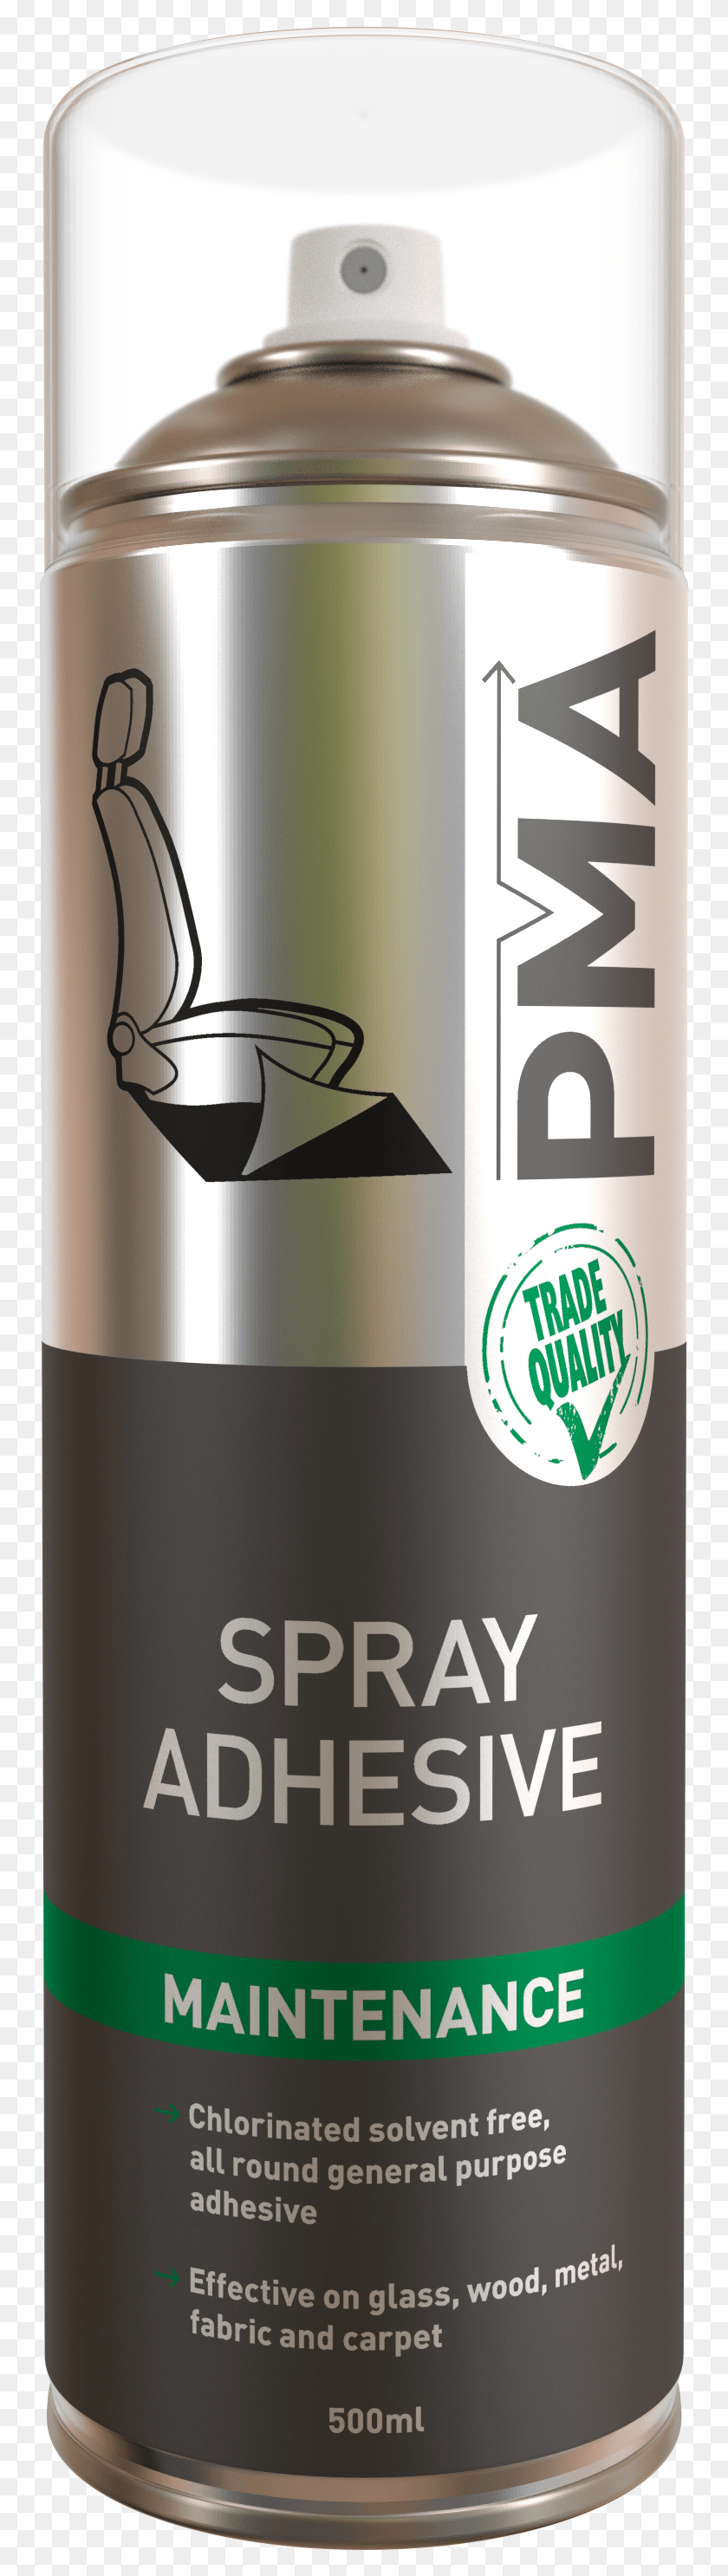 750x2913 Pma Spray Adhesive Caffeinated Drink, Этикетка, Текст, Шейкер Png Скачать